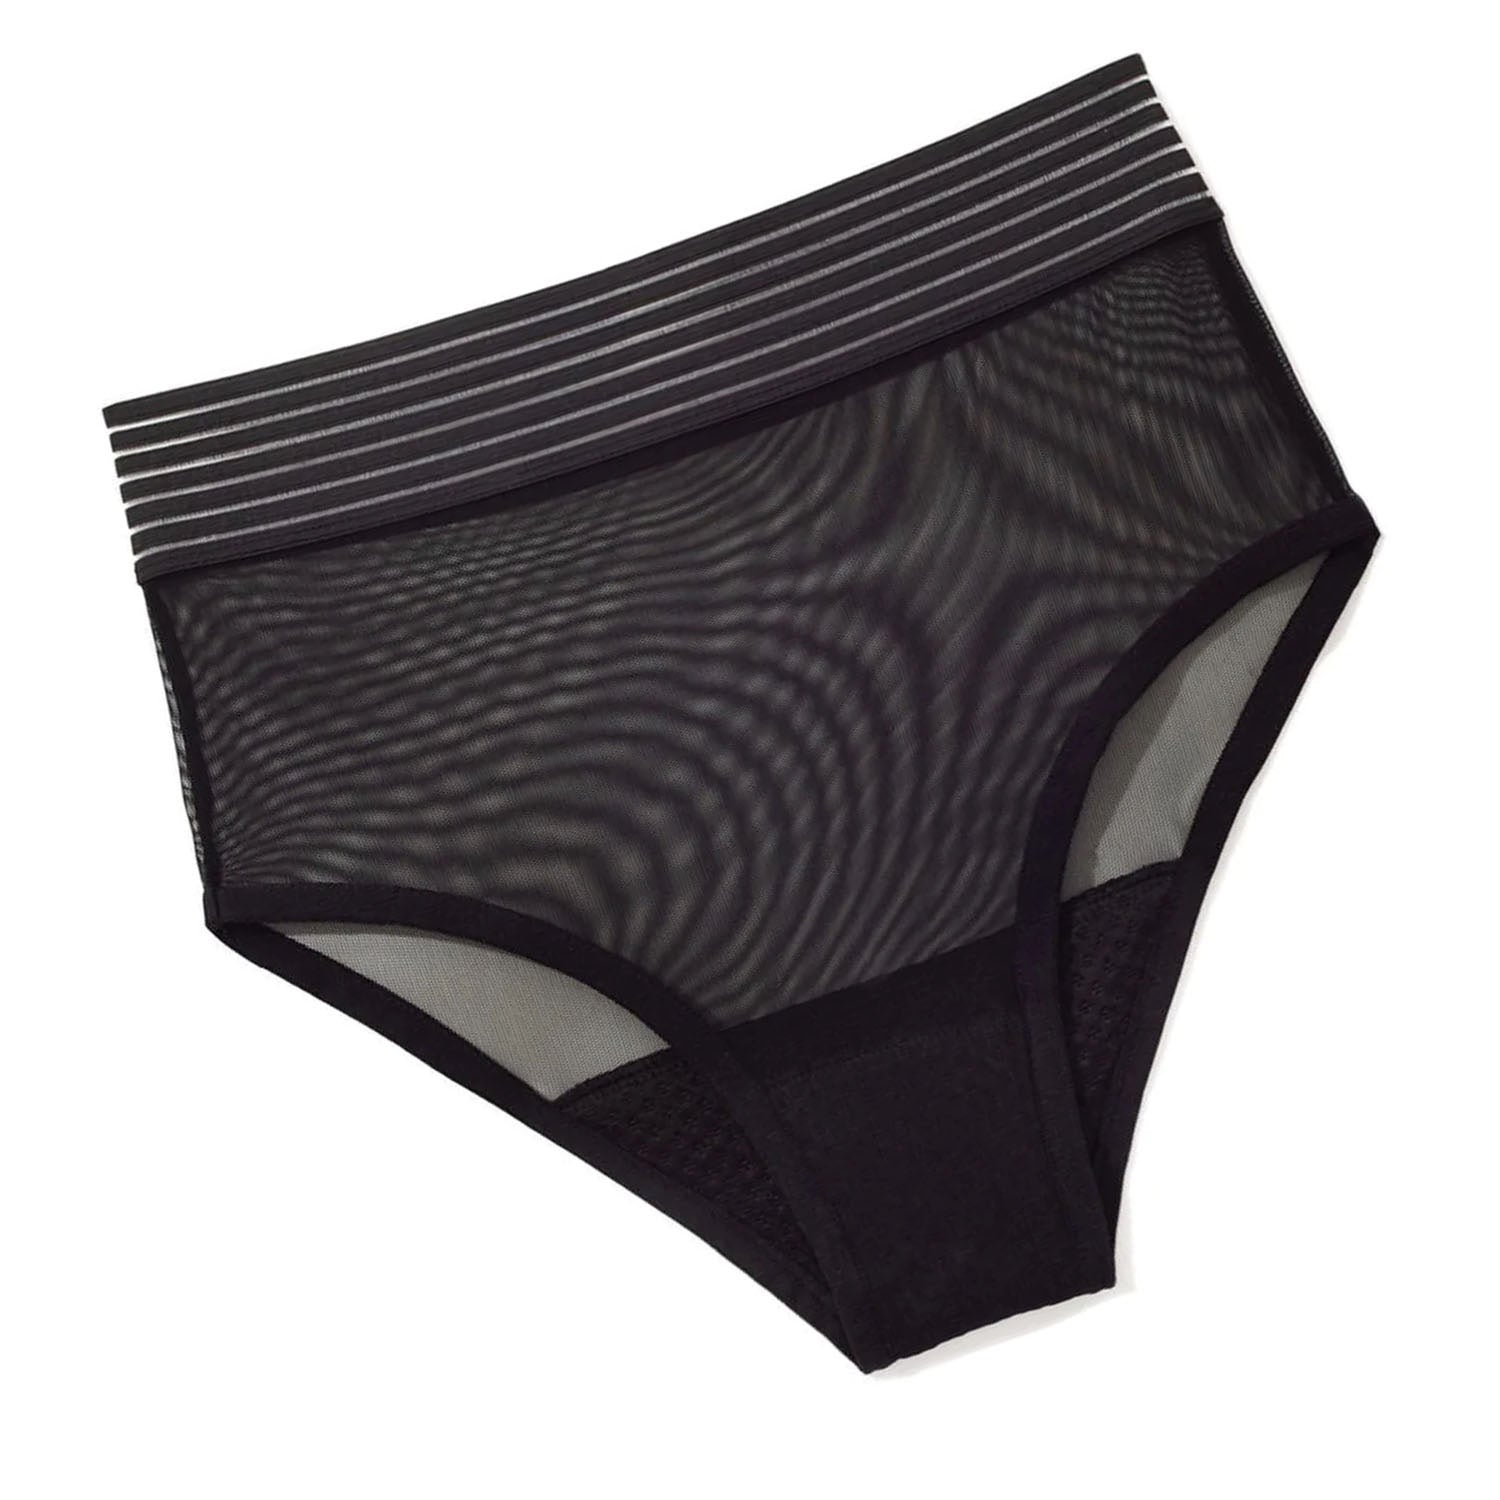 Polyester : Panties & Underwear for Women : Target